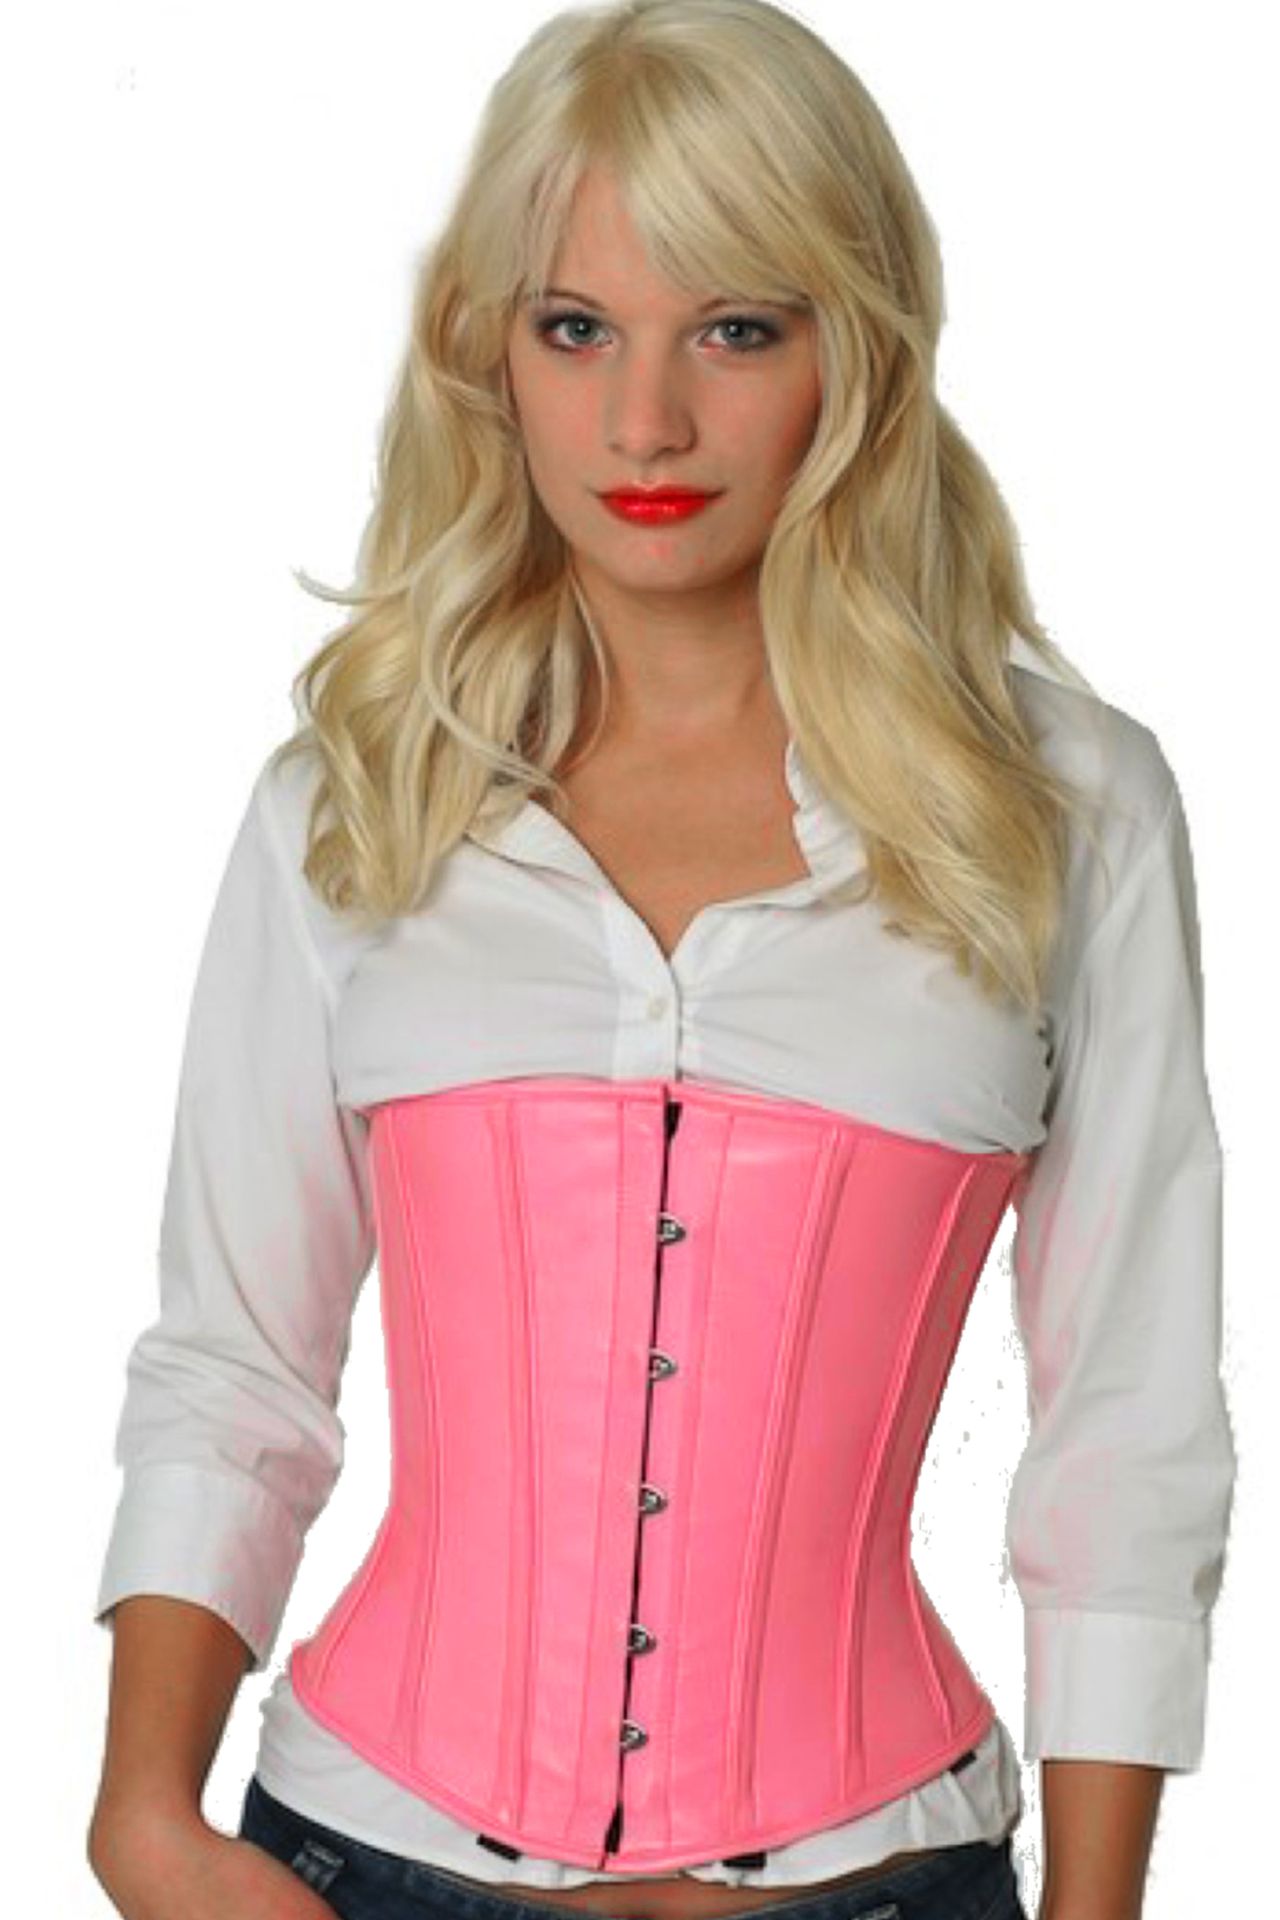 Corse rosa cuero bajo pecho corset lu22